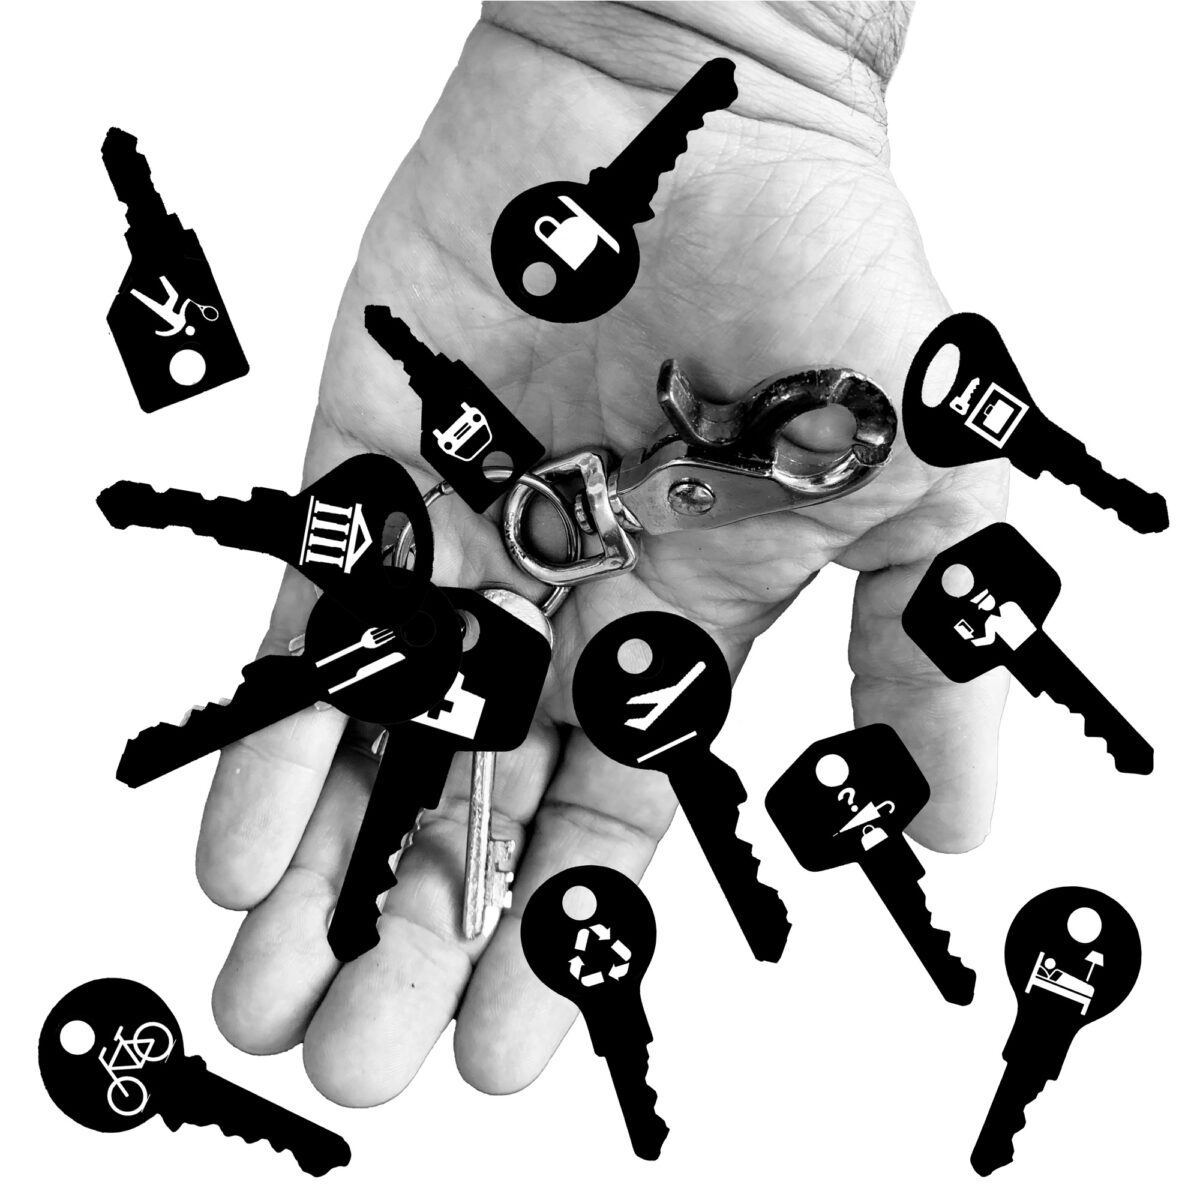 An open hand holds a bunch of keys